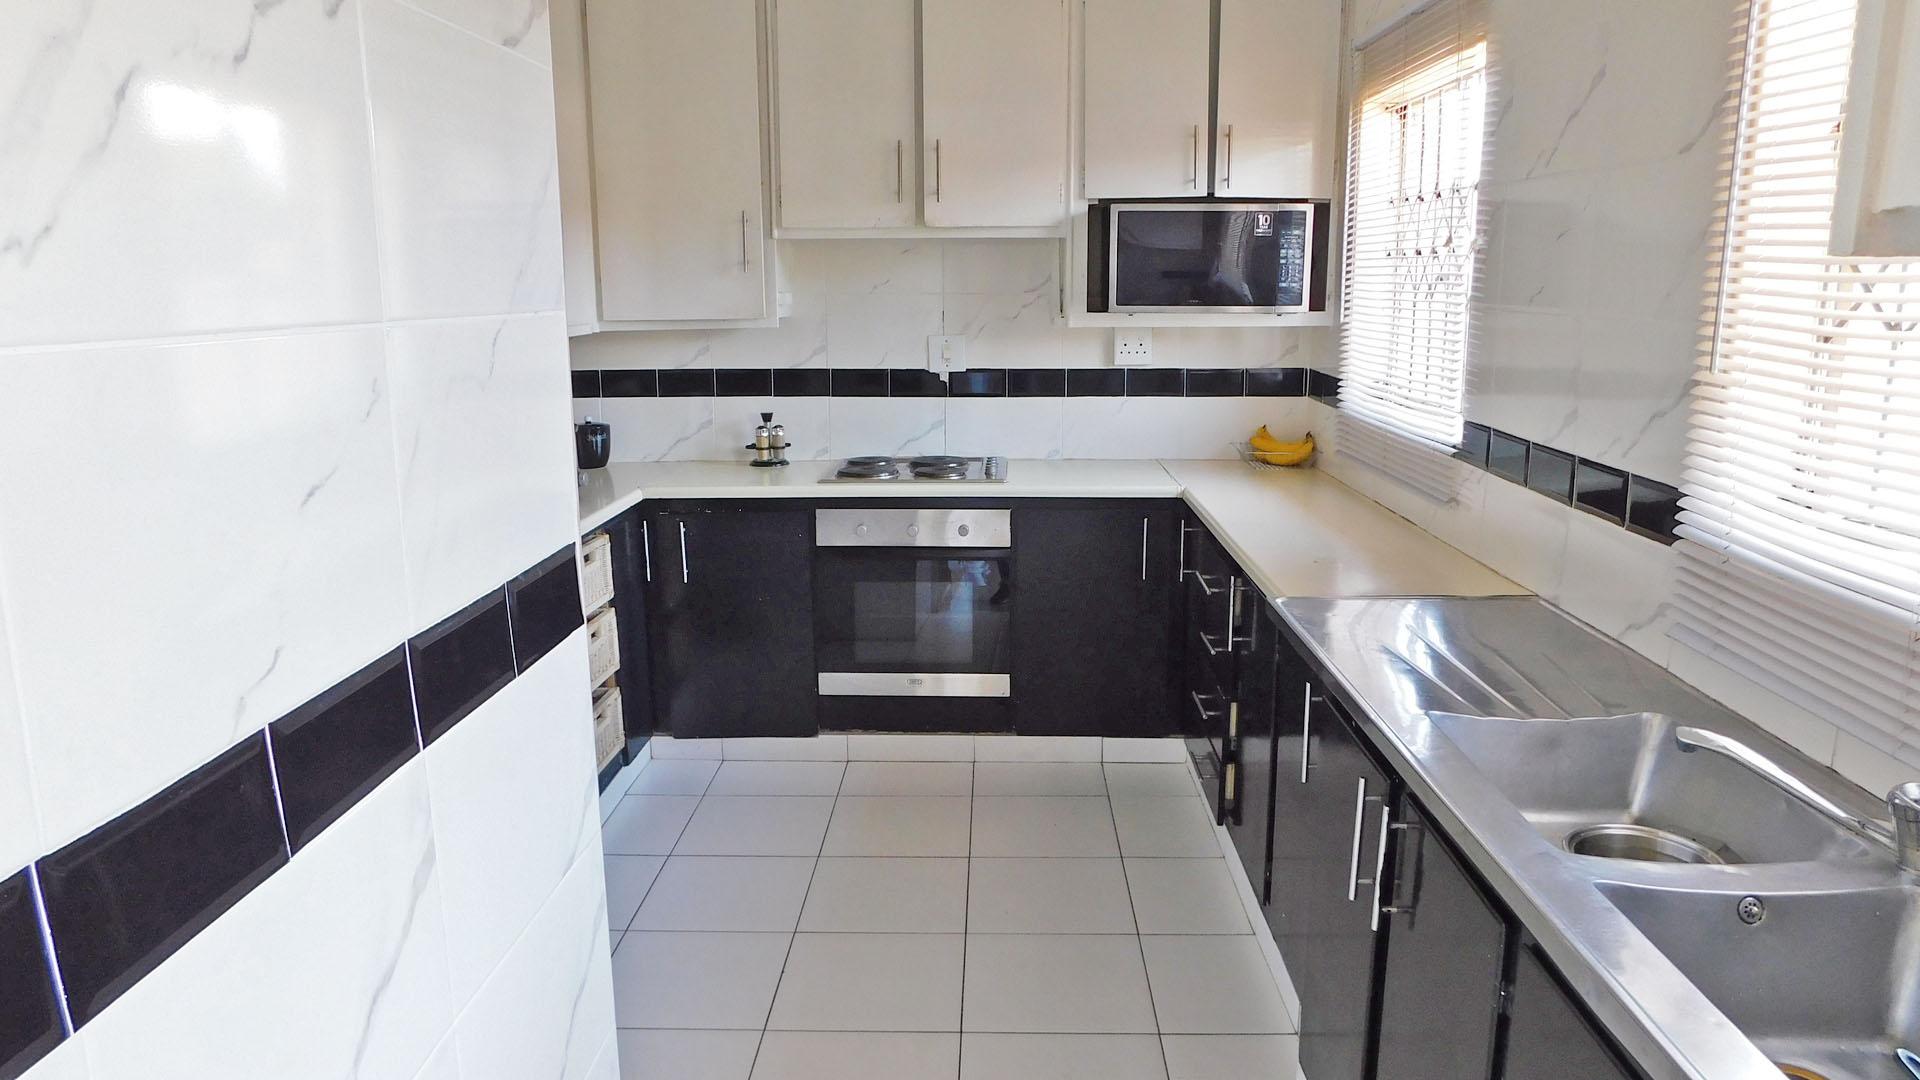 Kitchen - 16 square meters of property in Pietermaritzburg (KZN)